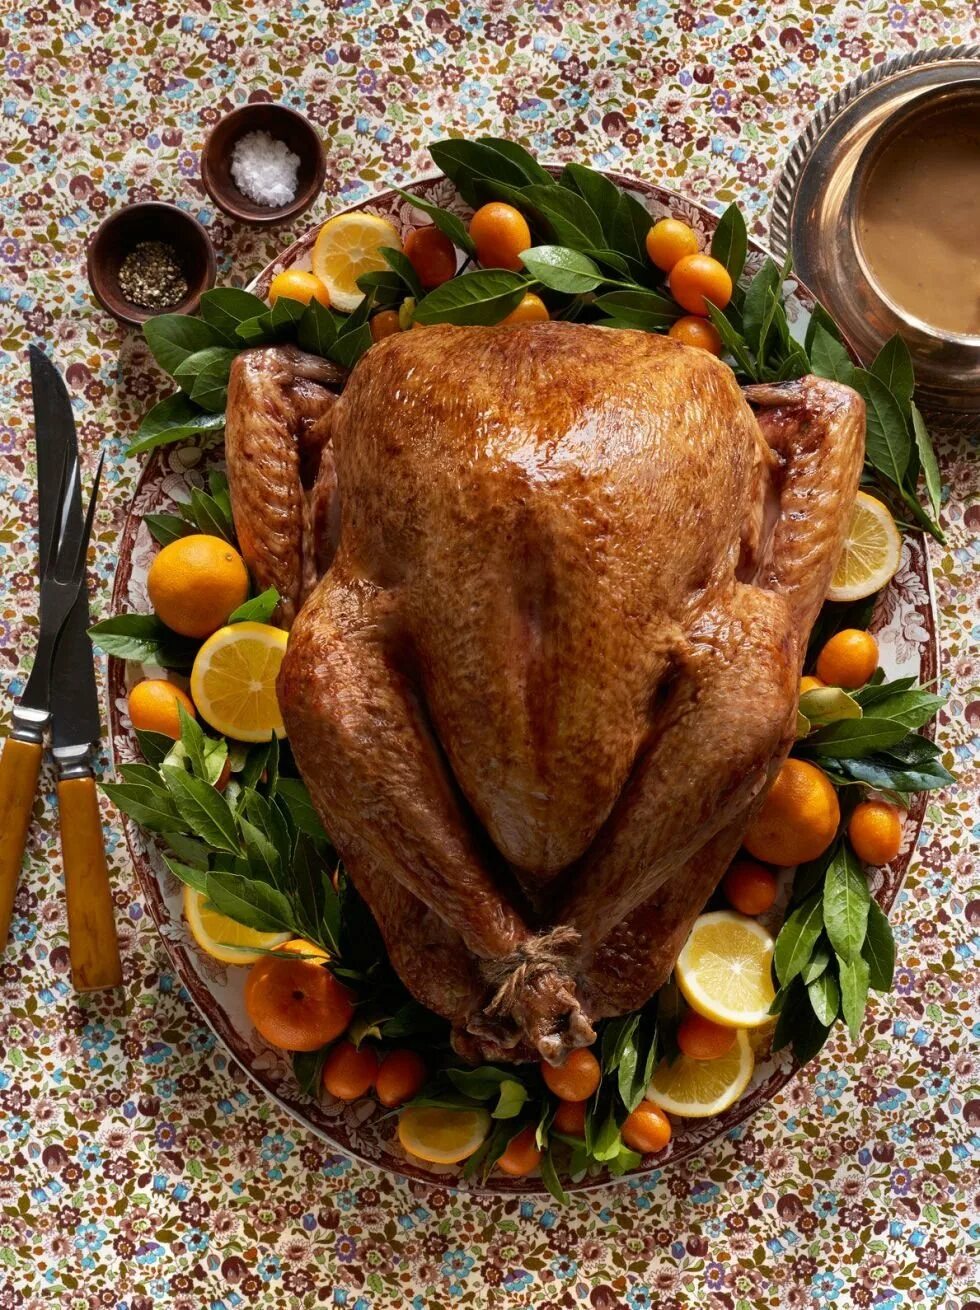 Thanksgiving turkey. A Turkey день Благодарения. Индейка на день Благодарения. Красивые блюда. Блюда на день Благодарения.